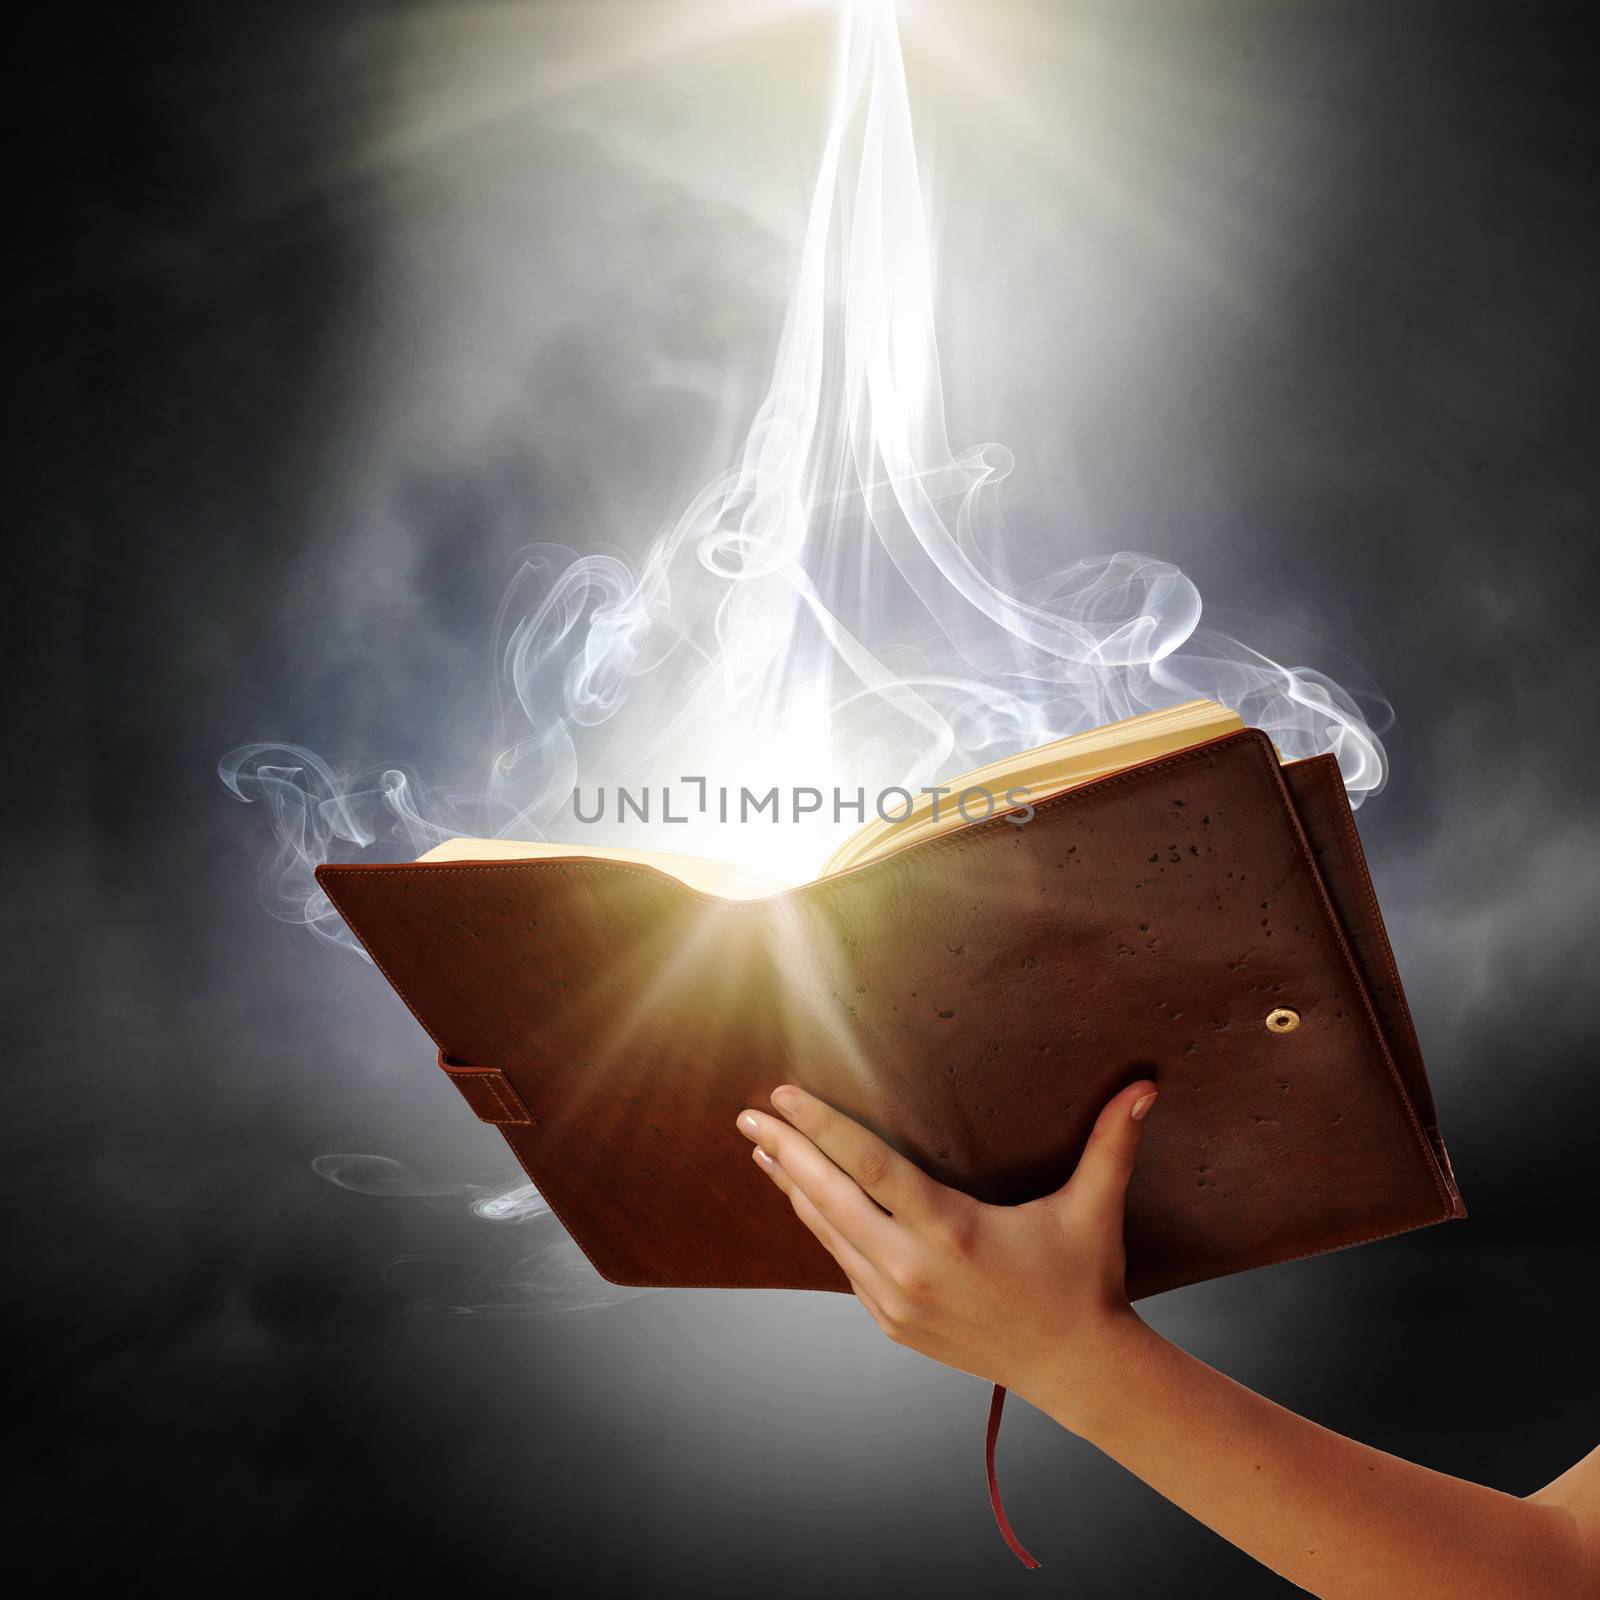 Human hand holding magic book with magic lights